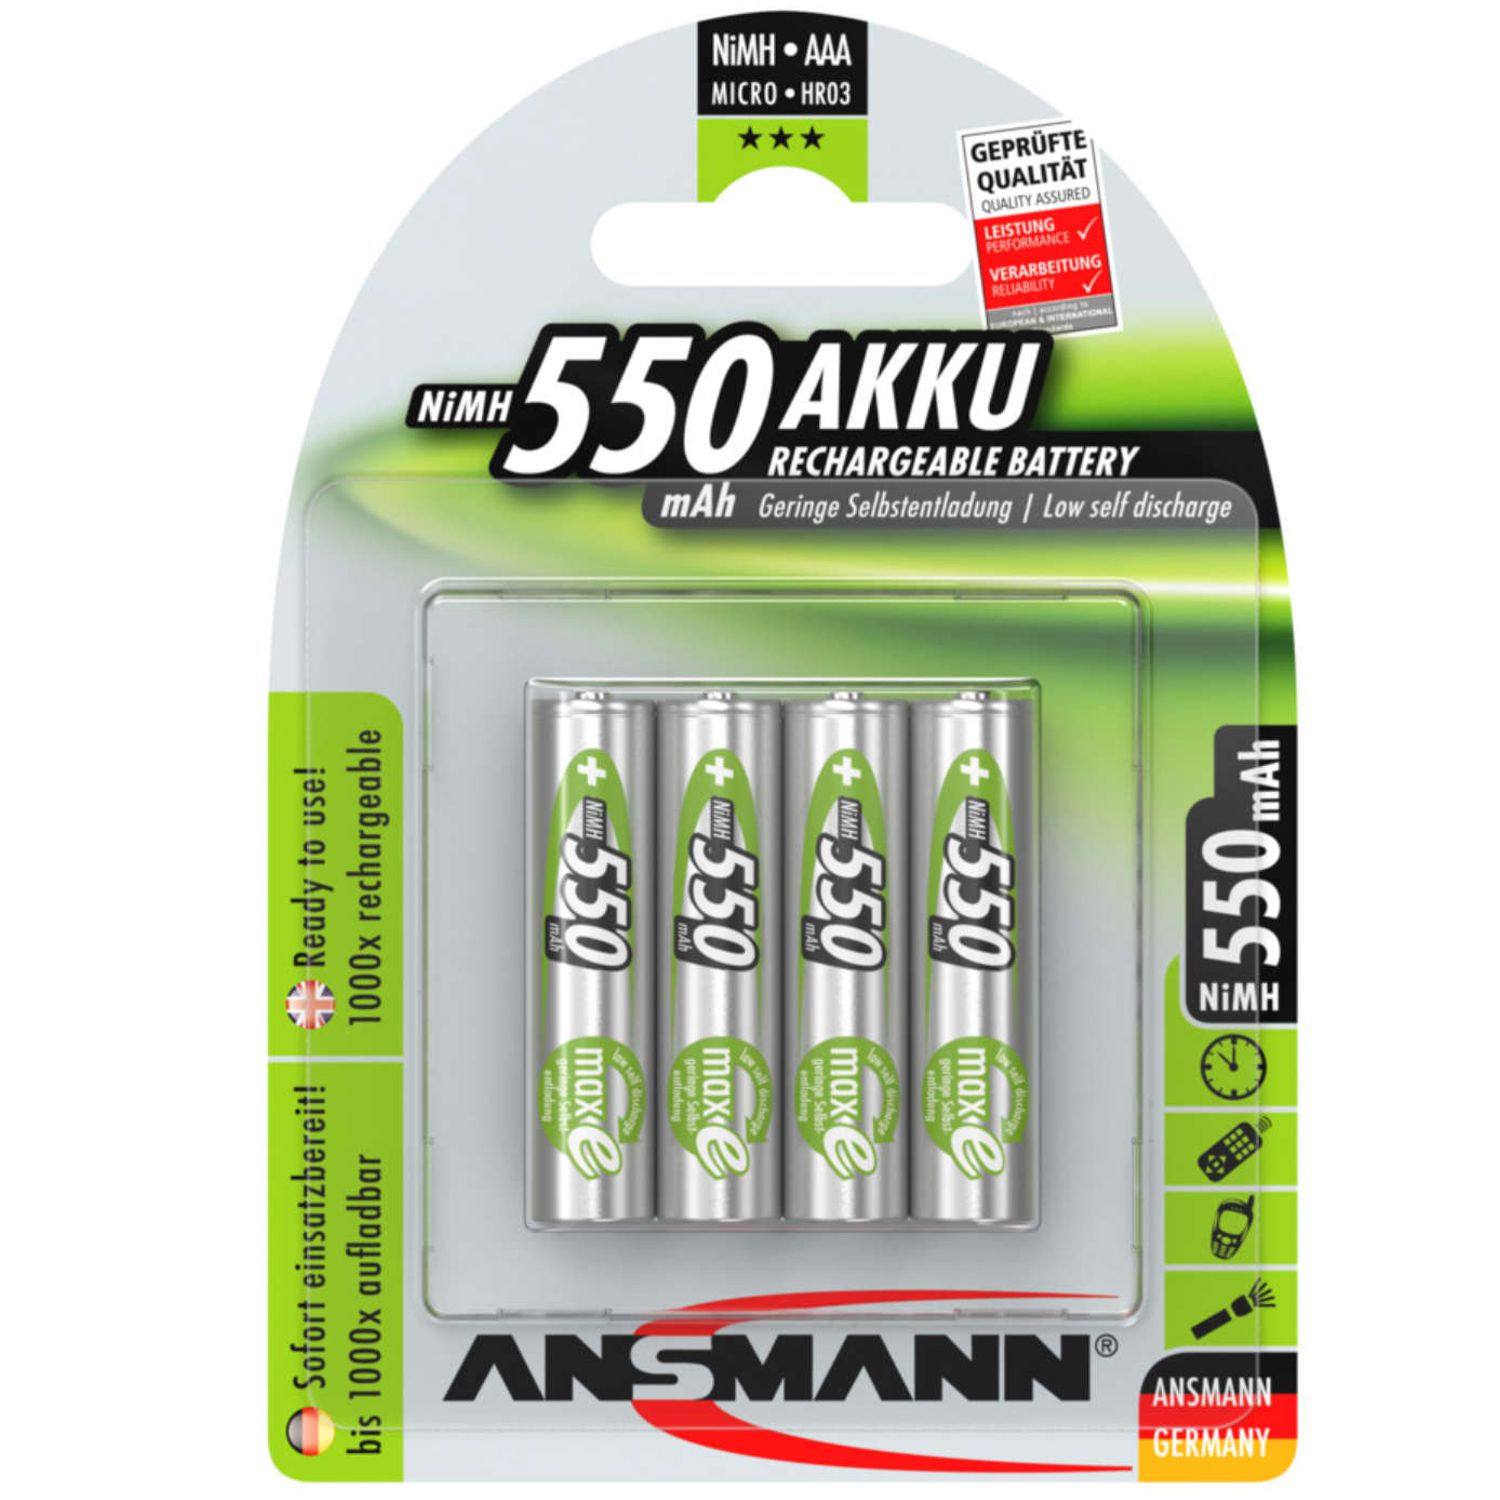 ANSMANN maxE Micro (AAA) Green Akku 1,2Volt 550mAh NiMH im 4er Blister